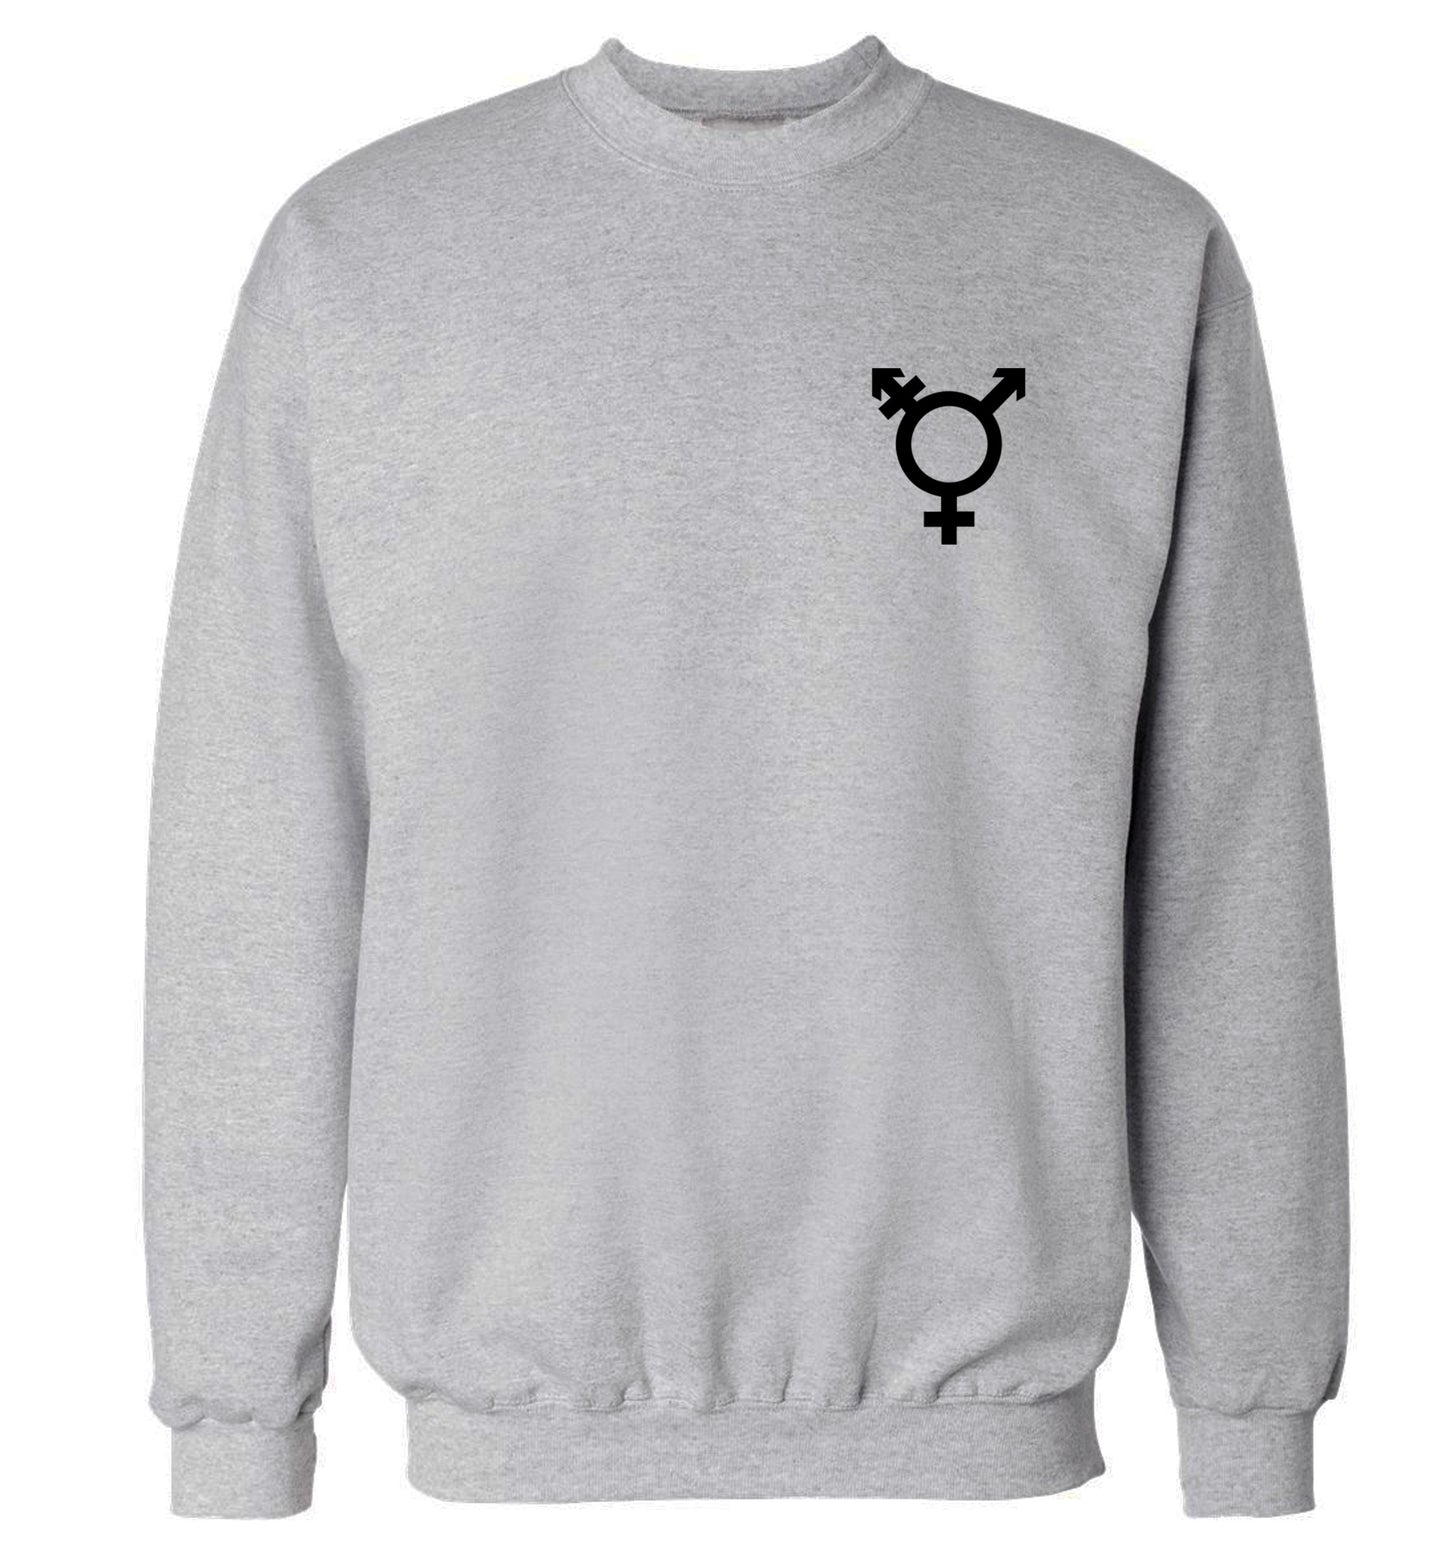 Trans gender symbol pocket Adult's unisex grey Sweater 2XL